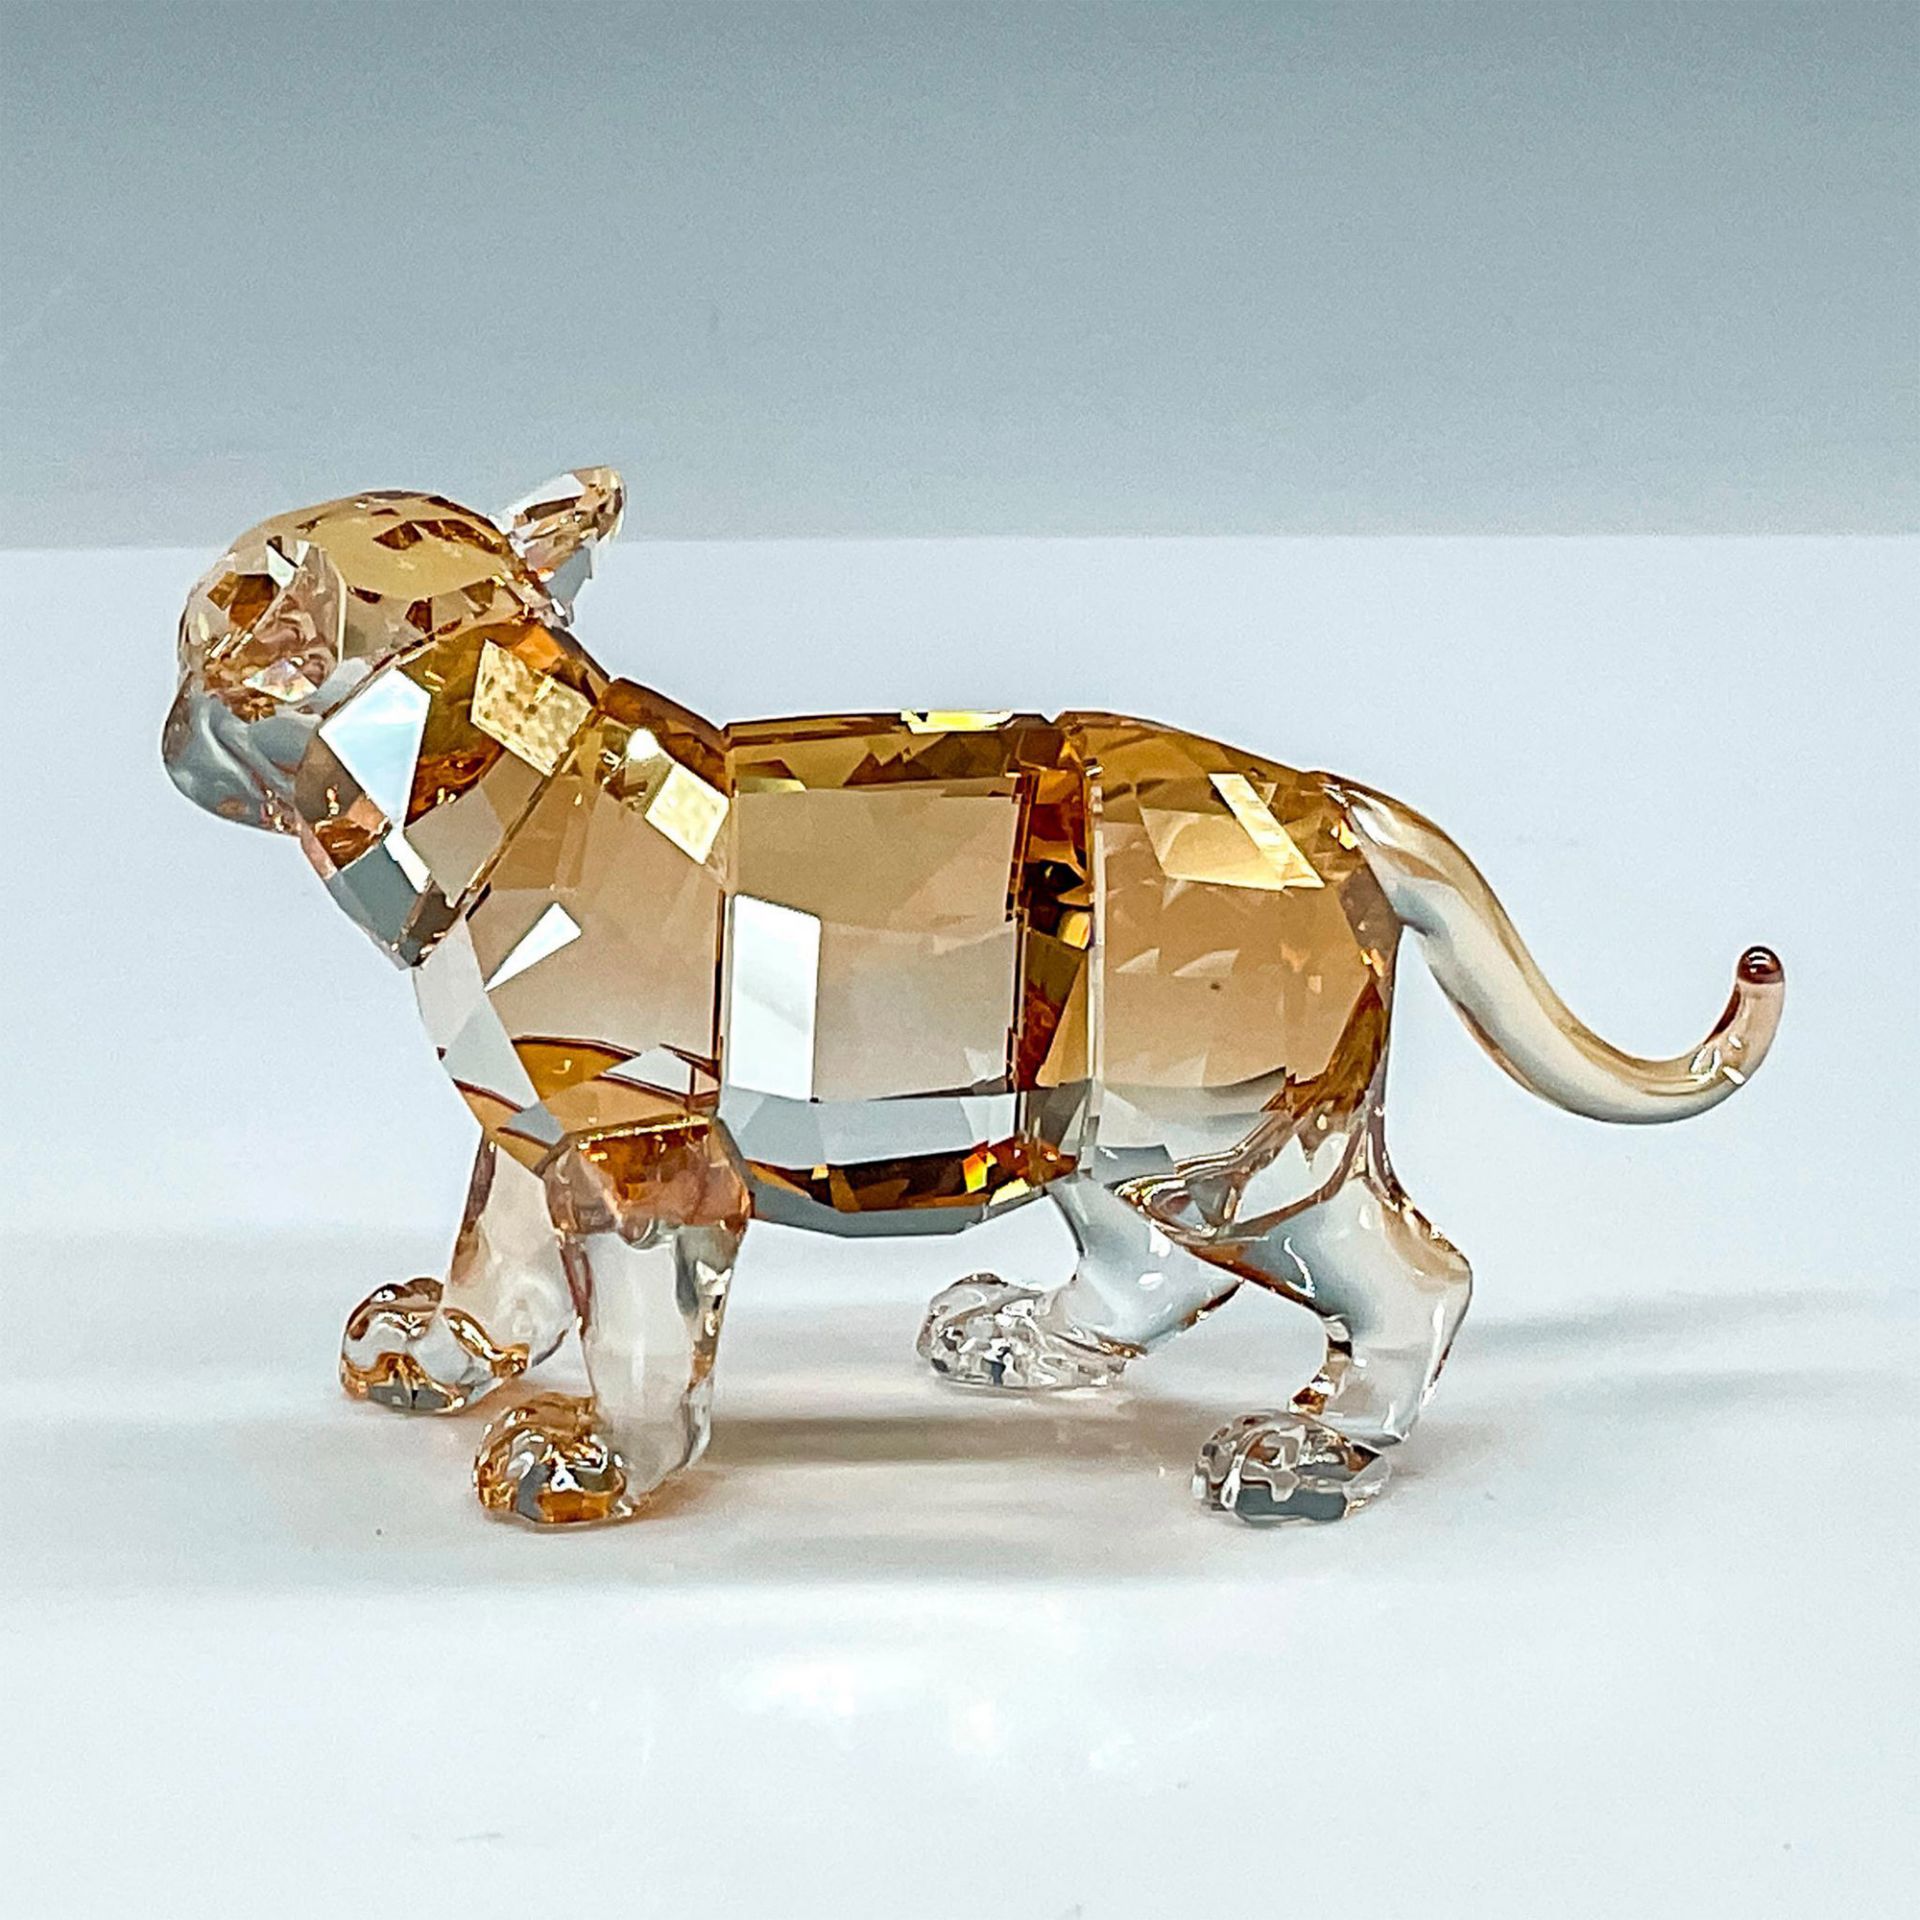 Swarovski SCS Crystal Figurine, Tiger Cub Annual Edition - Image 2 of 3